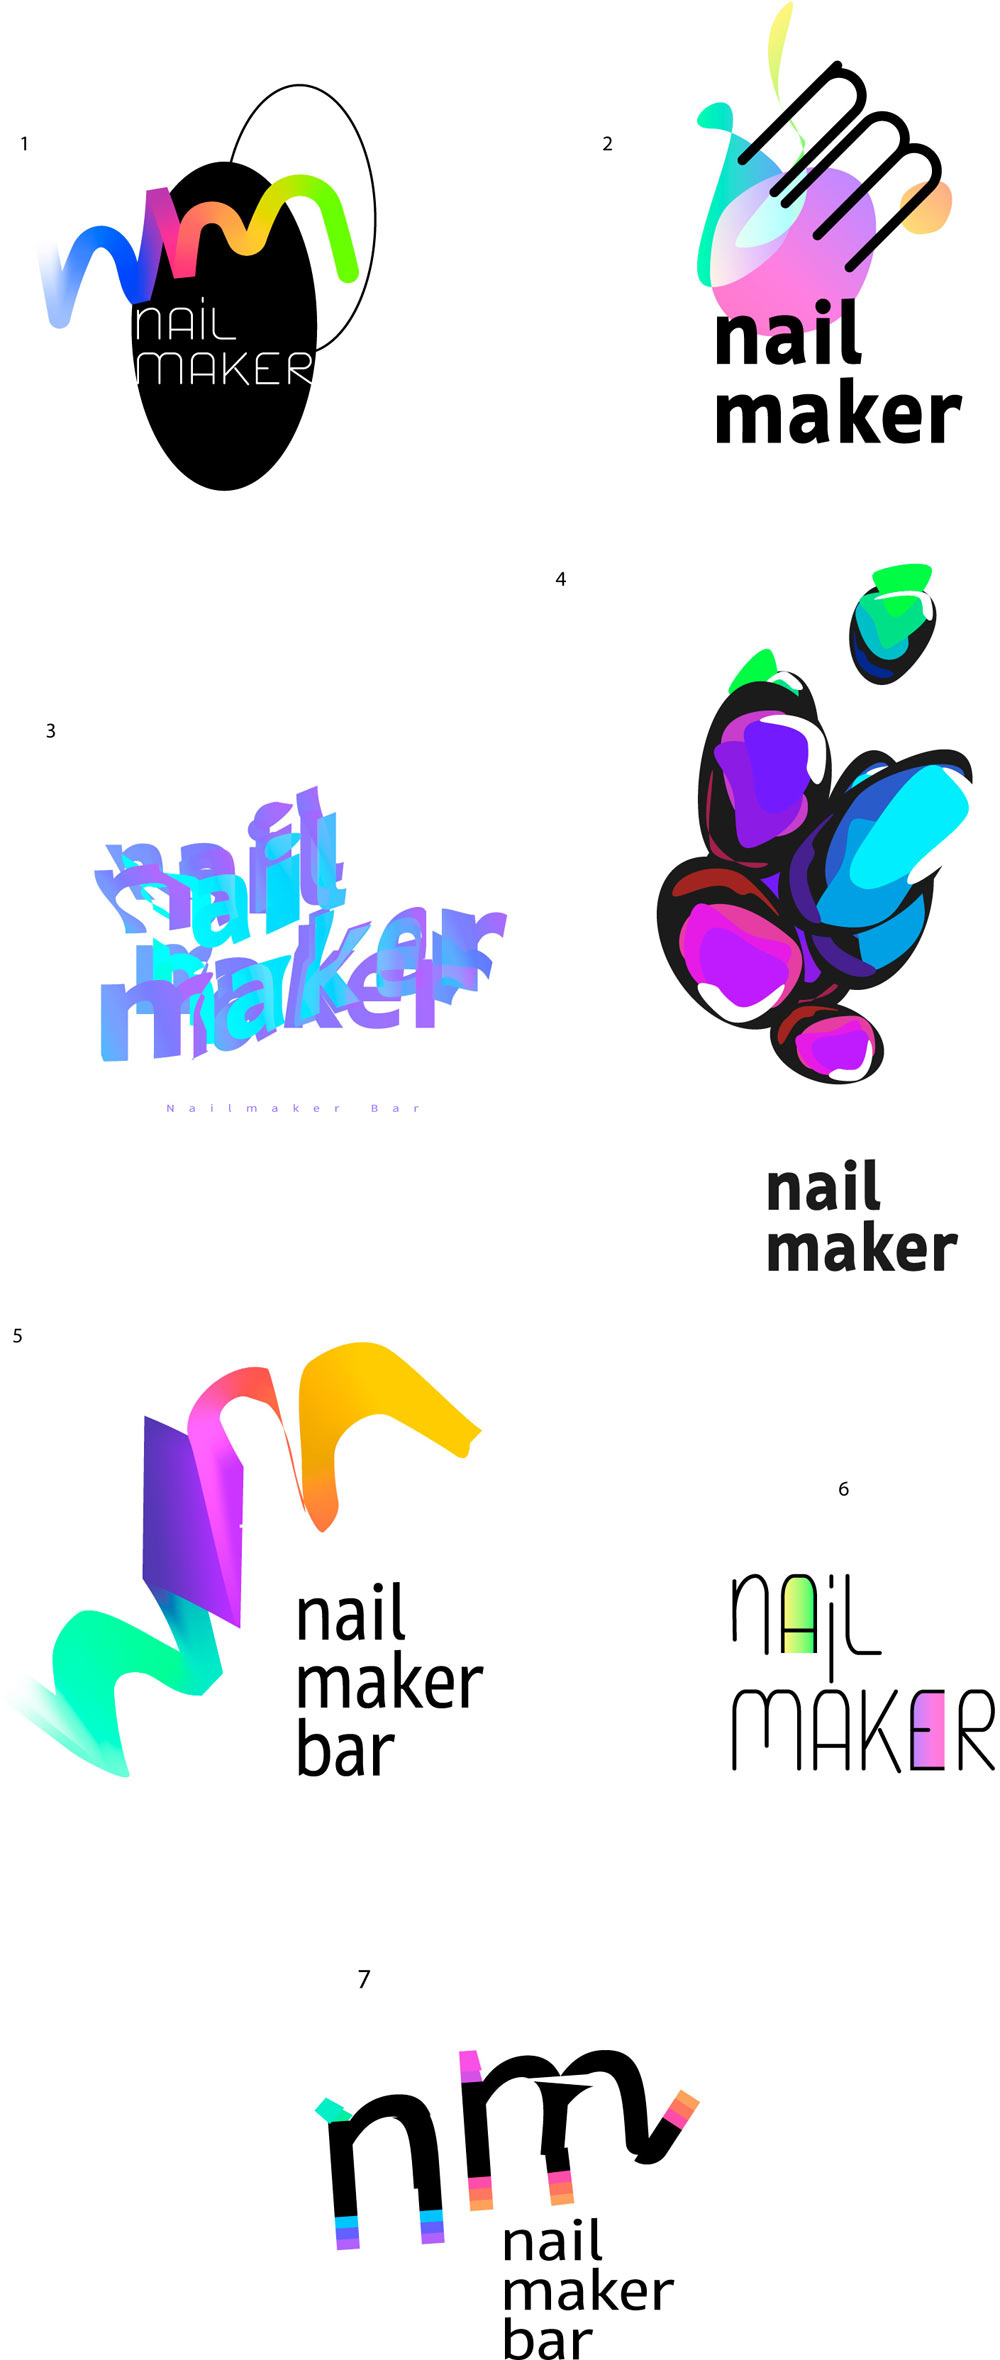 nailmaker bar process 03